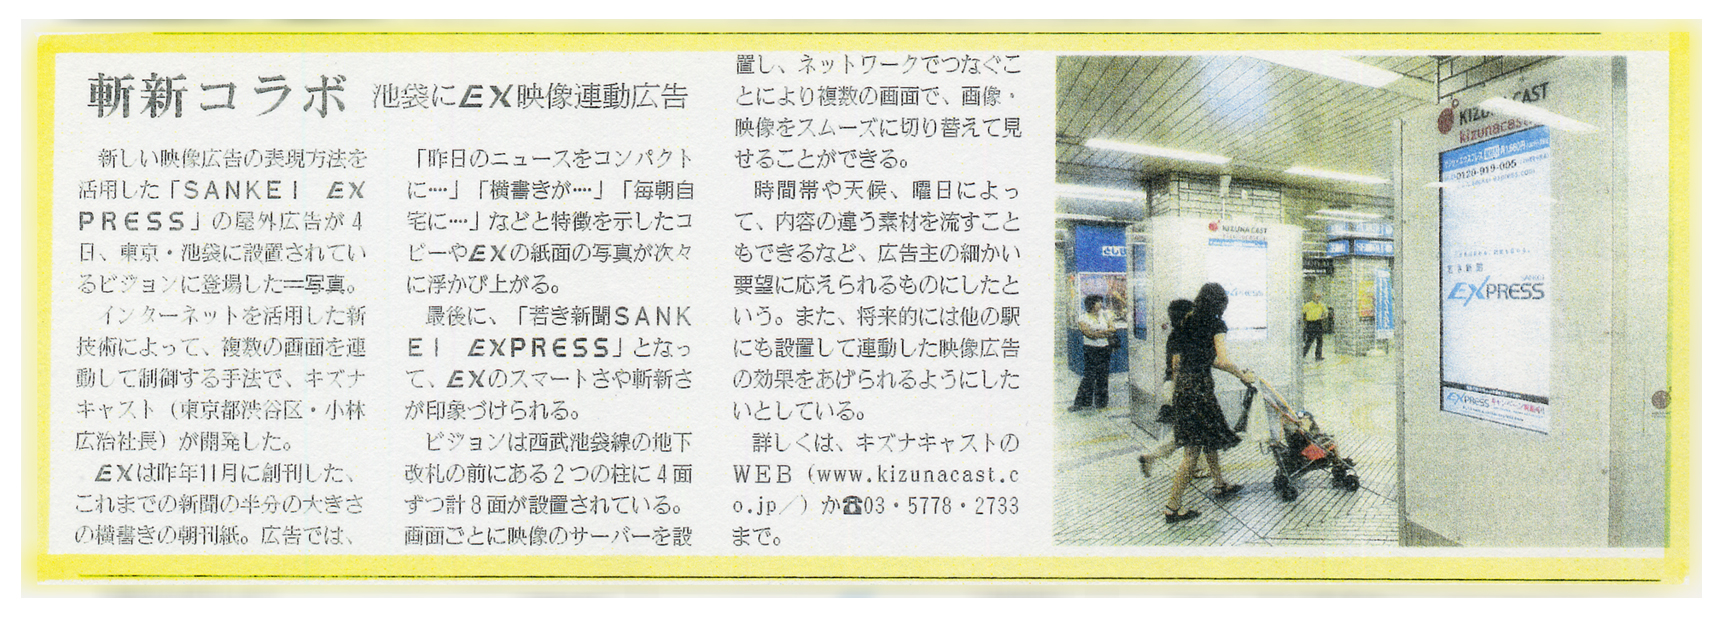 SANKEI EXPRESS「斬新コラボ池袋にEX映像連動広告」